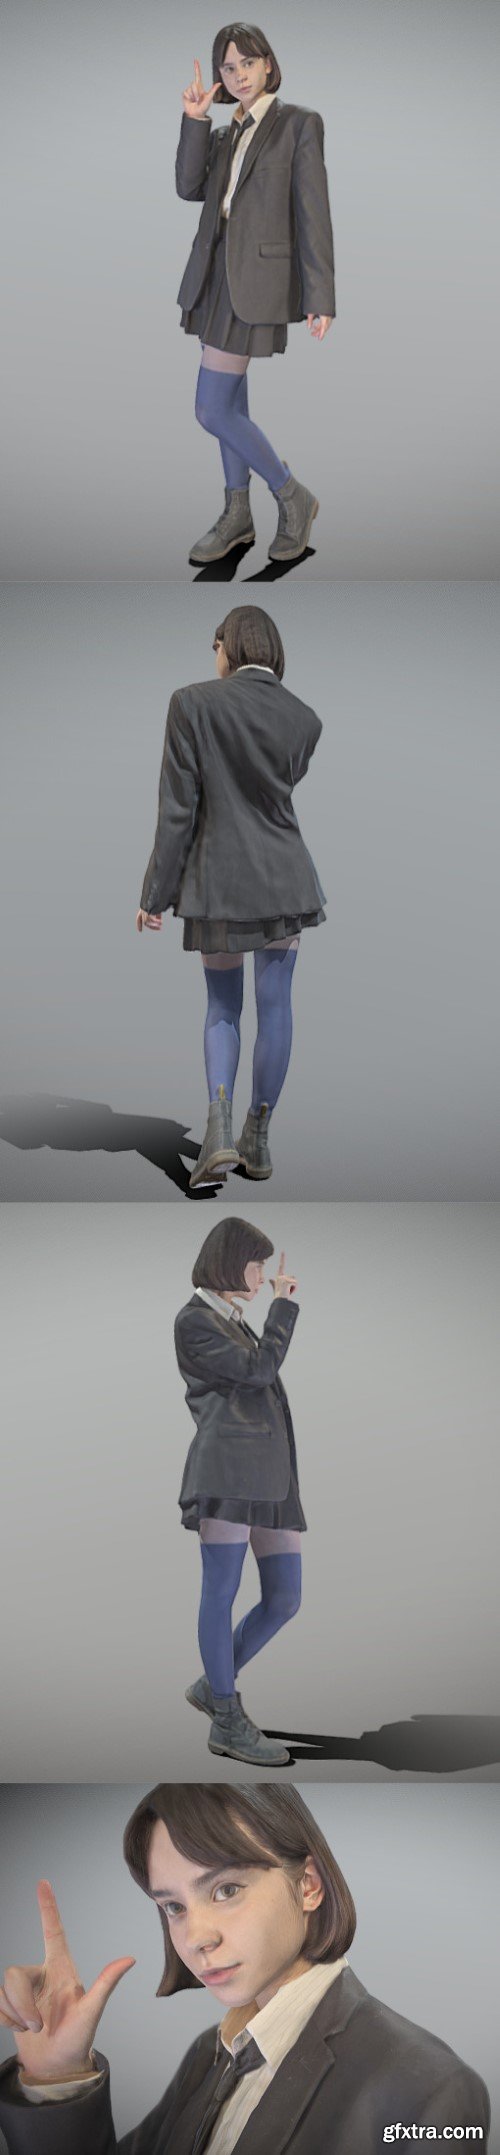 Playful girl in school uniform posing 183